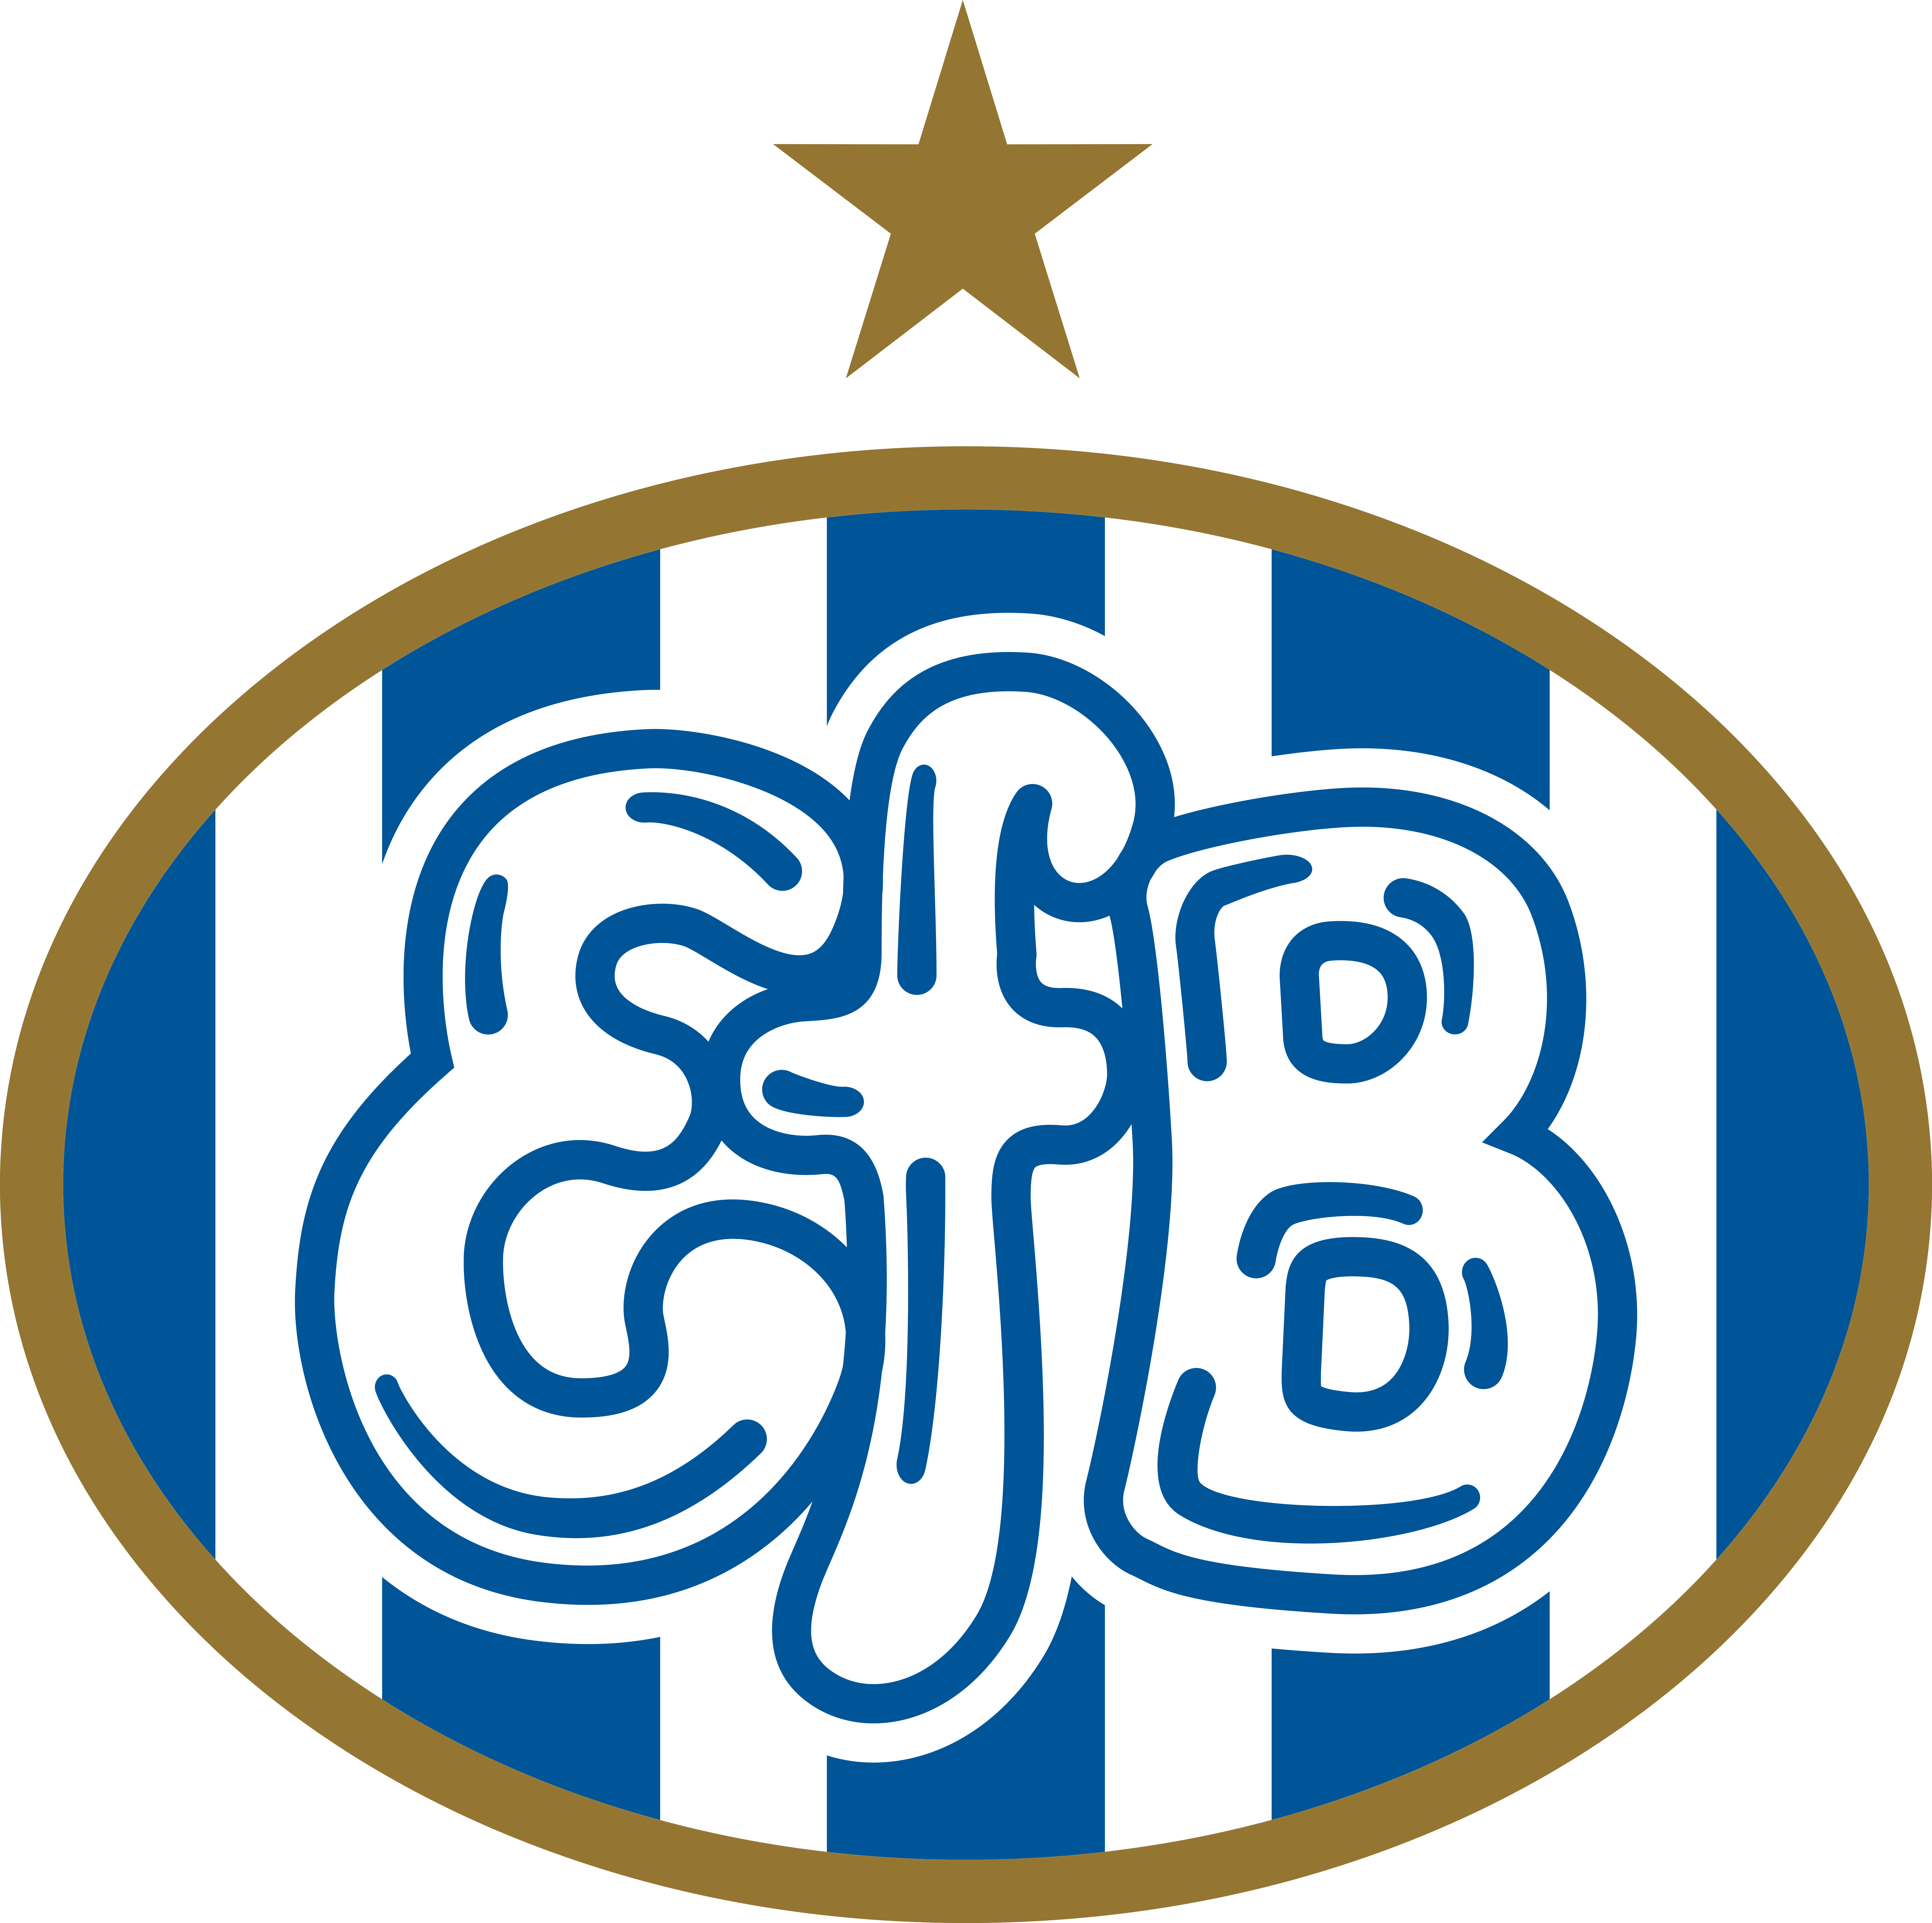 Efb logo